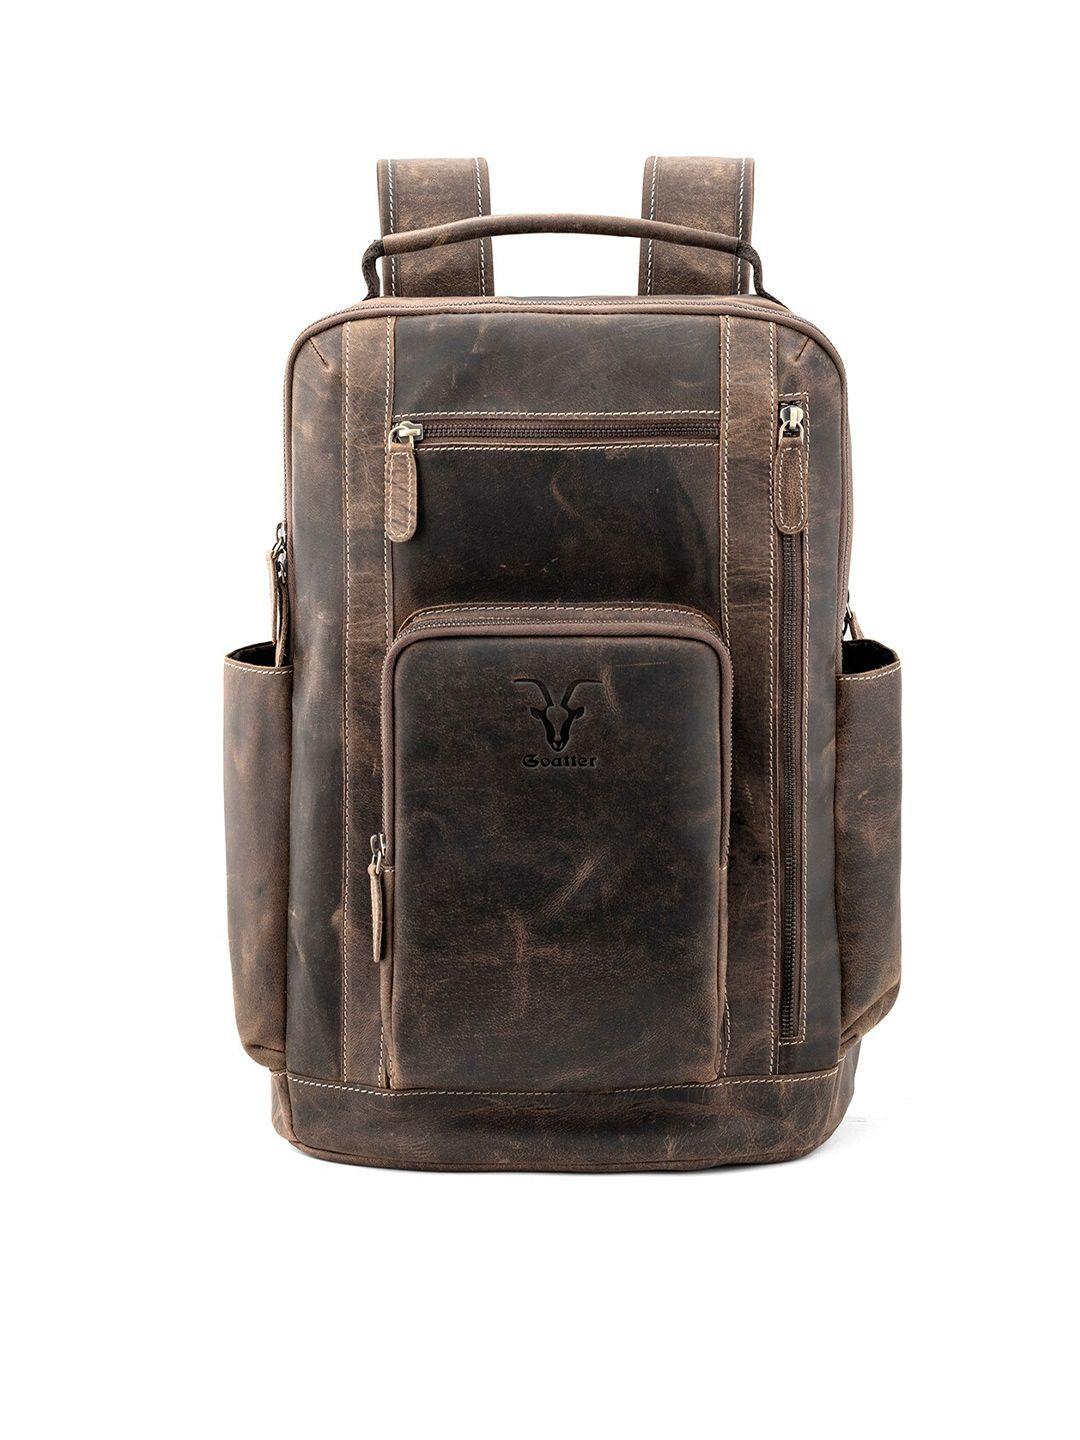 goatter men laptop leather backpack with compression straps